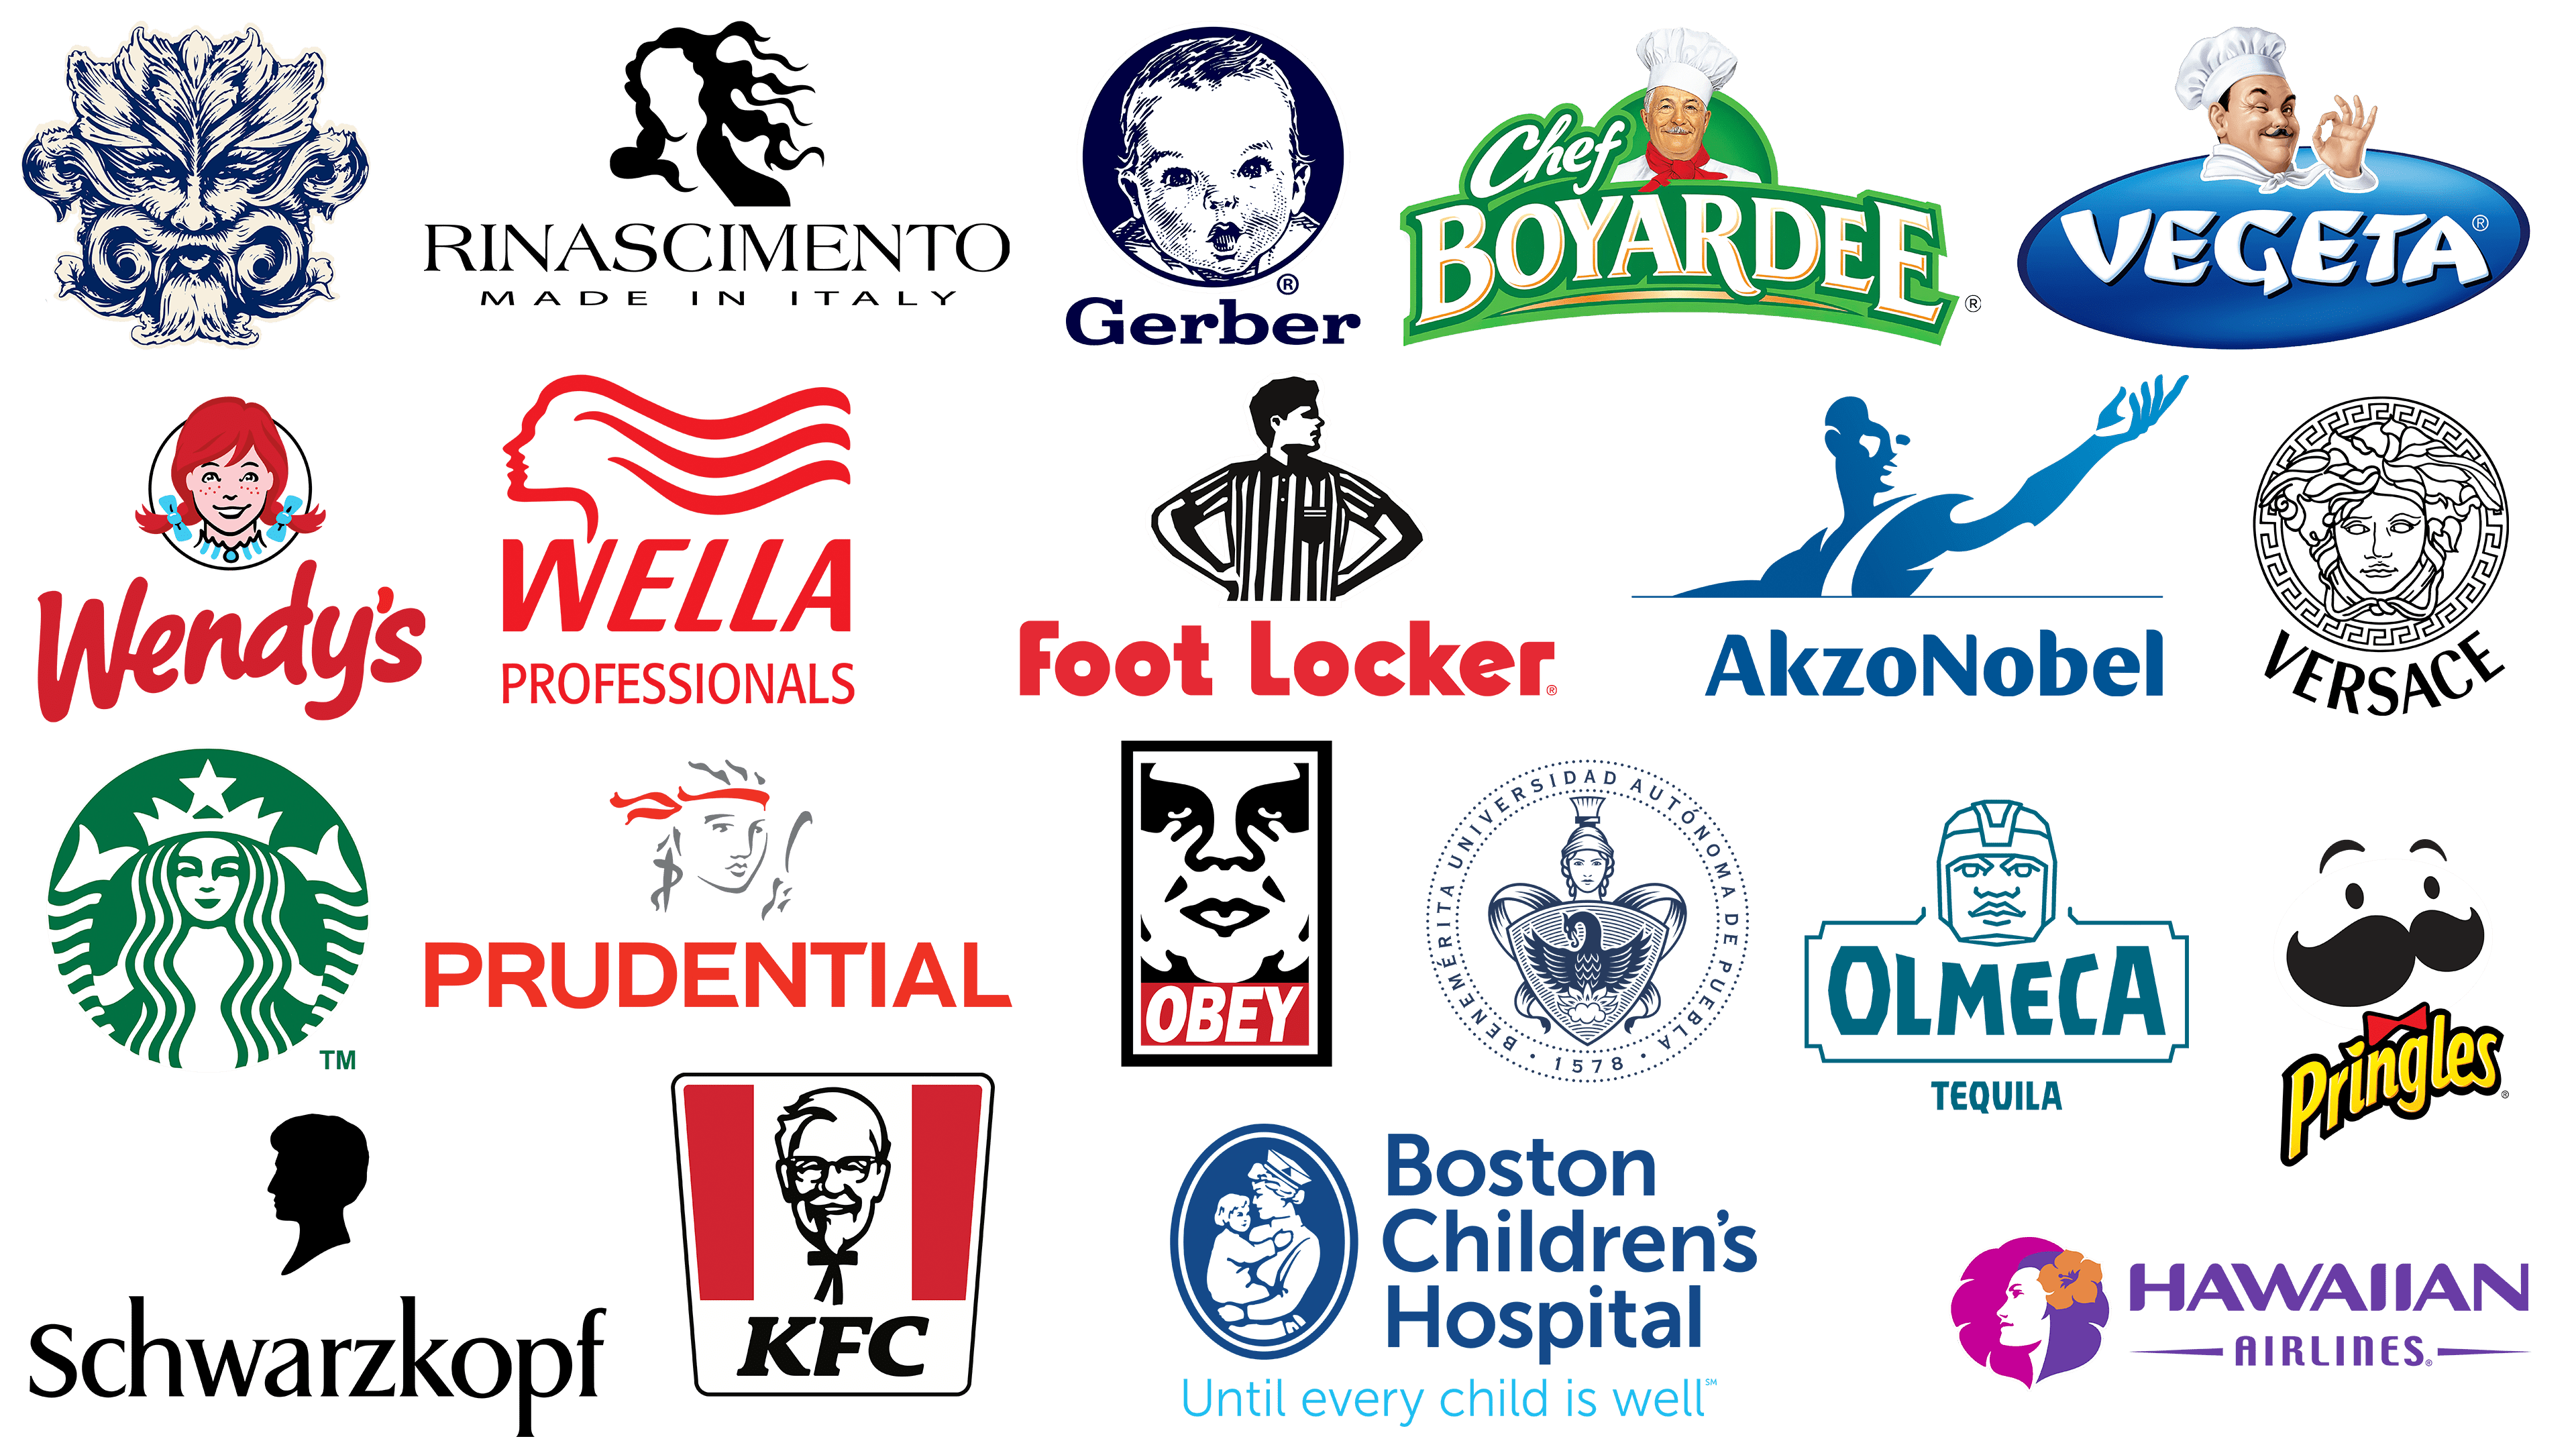 red food brand logos